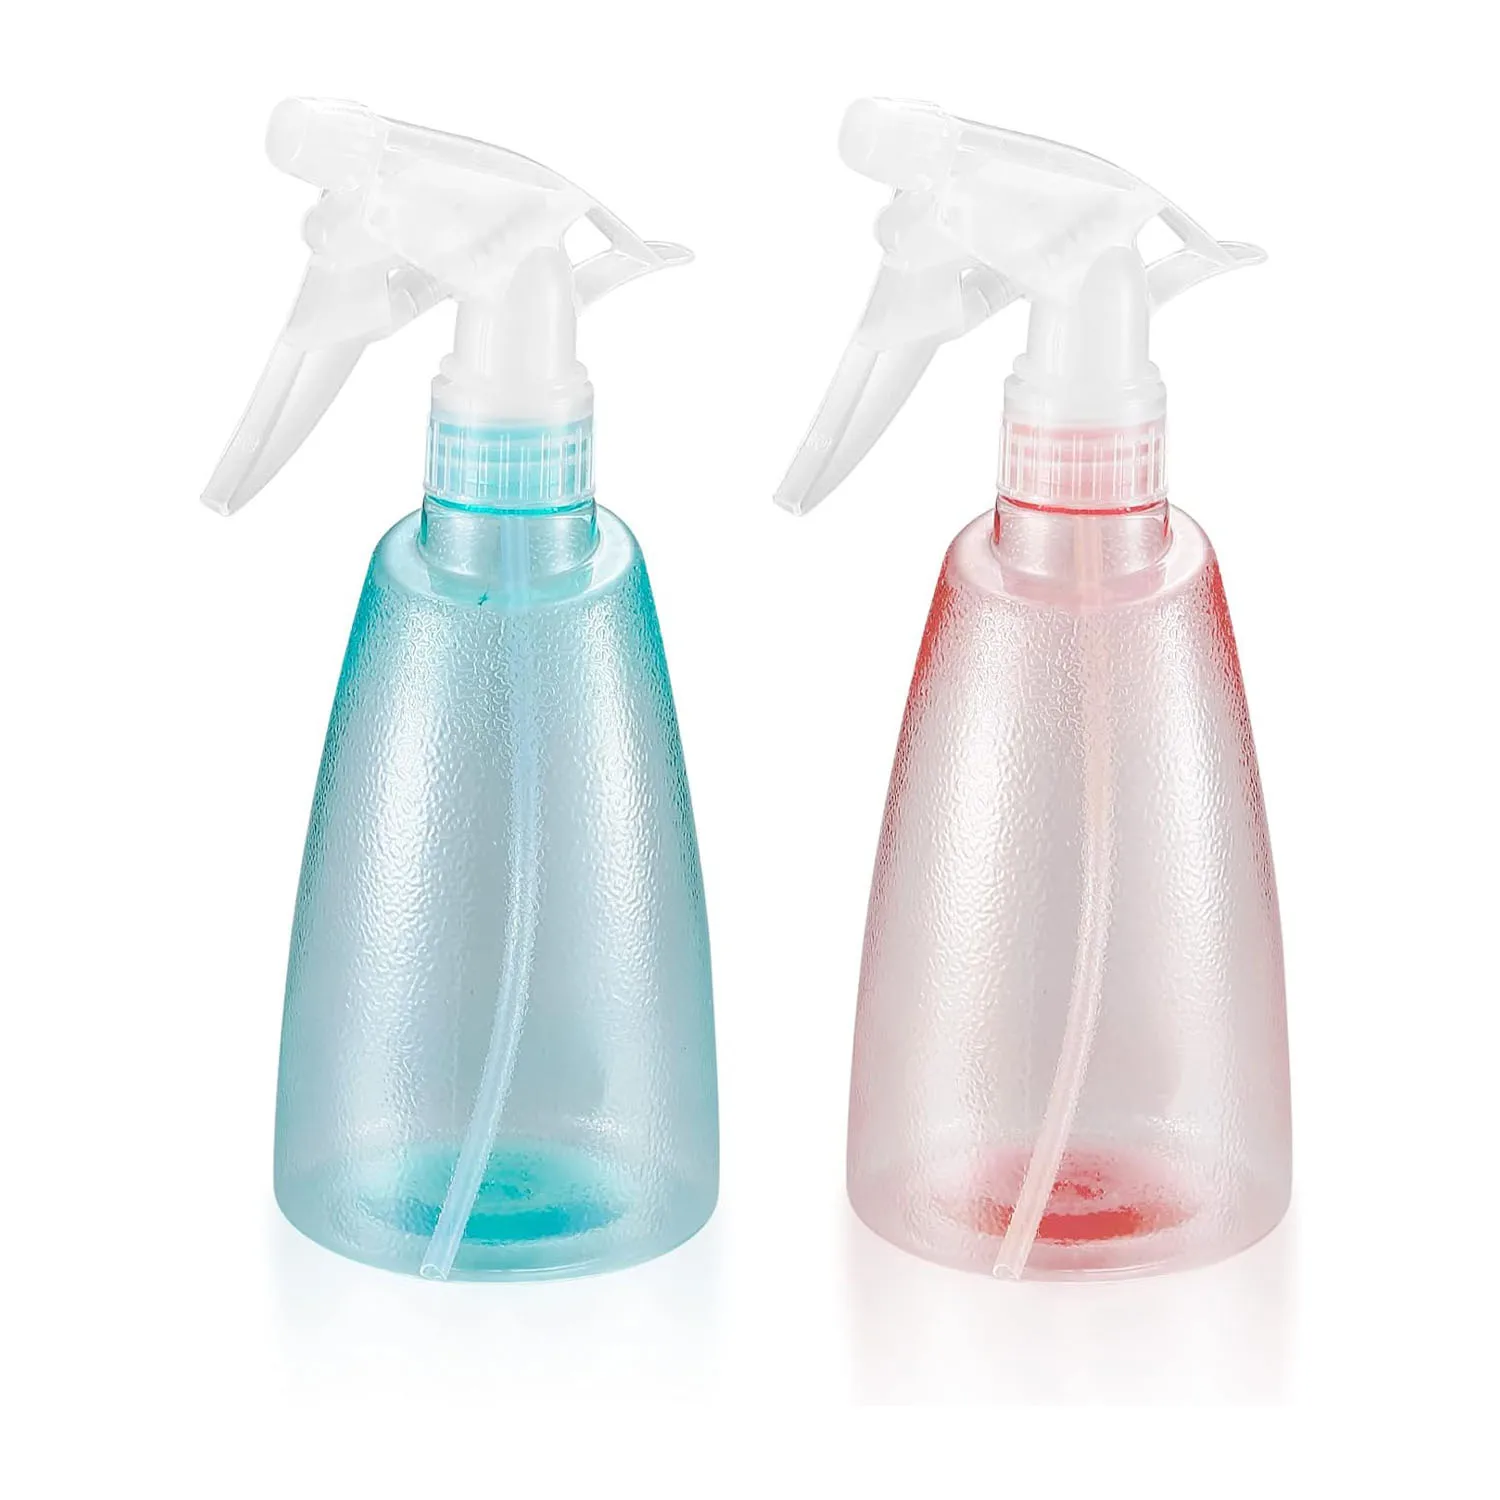 1 Pcs 500 ml/17 oz Empty Plastic Spray Bottles, Refillable Adjustable Mist Sprayer Bottles for Cleaning Solutions, Hair Misting